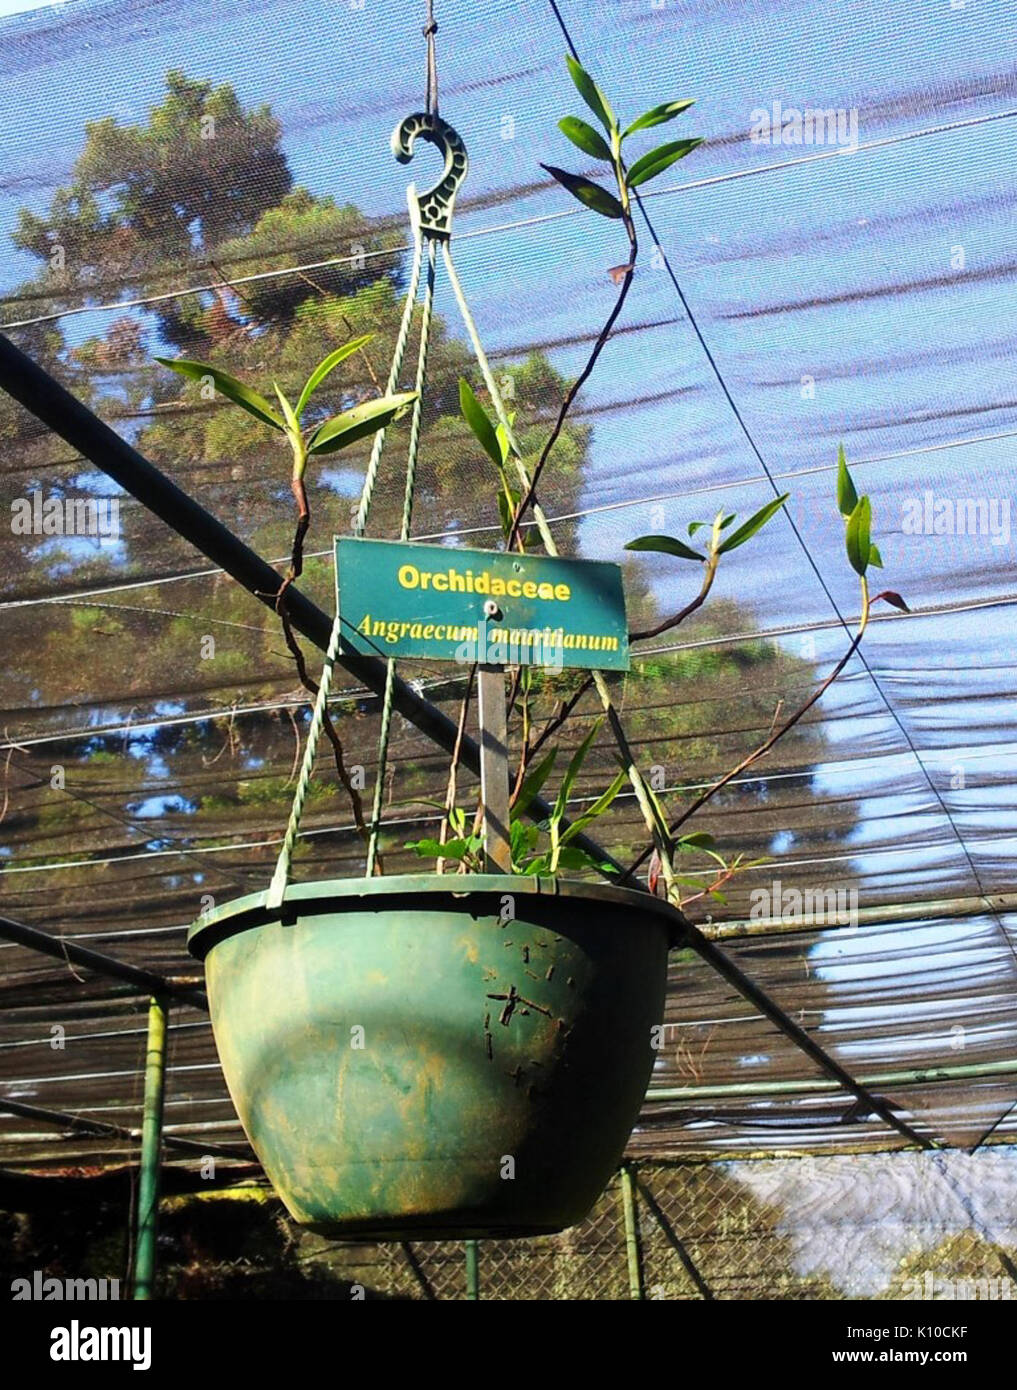 Angraecum mauritianum orchid   Monvert fernery Mauritius 3 Stock Photo